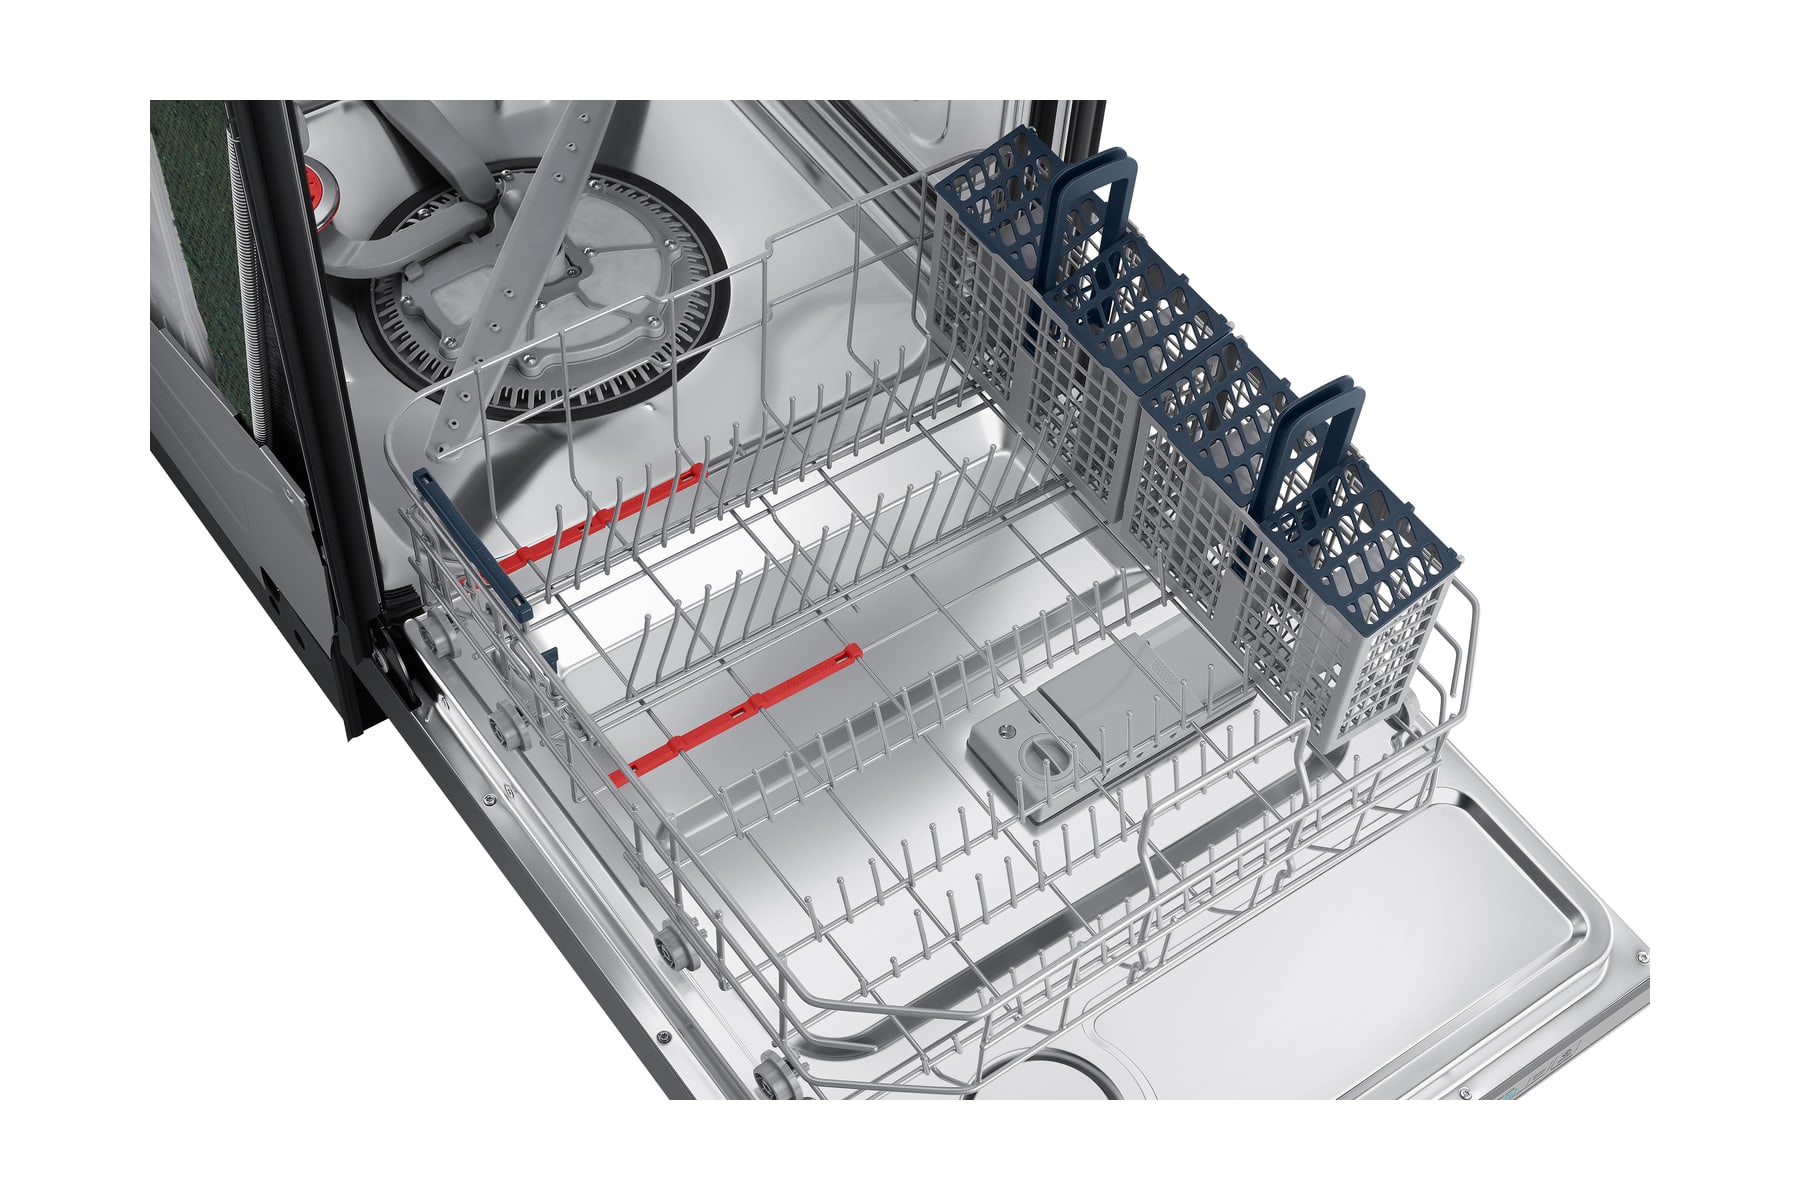 samsung dishwasher lower rack wheels